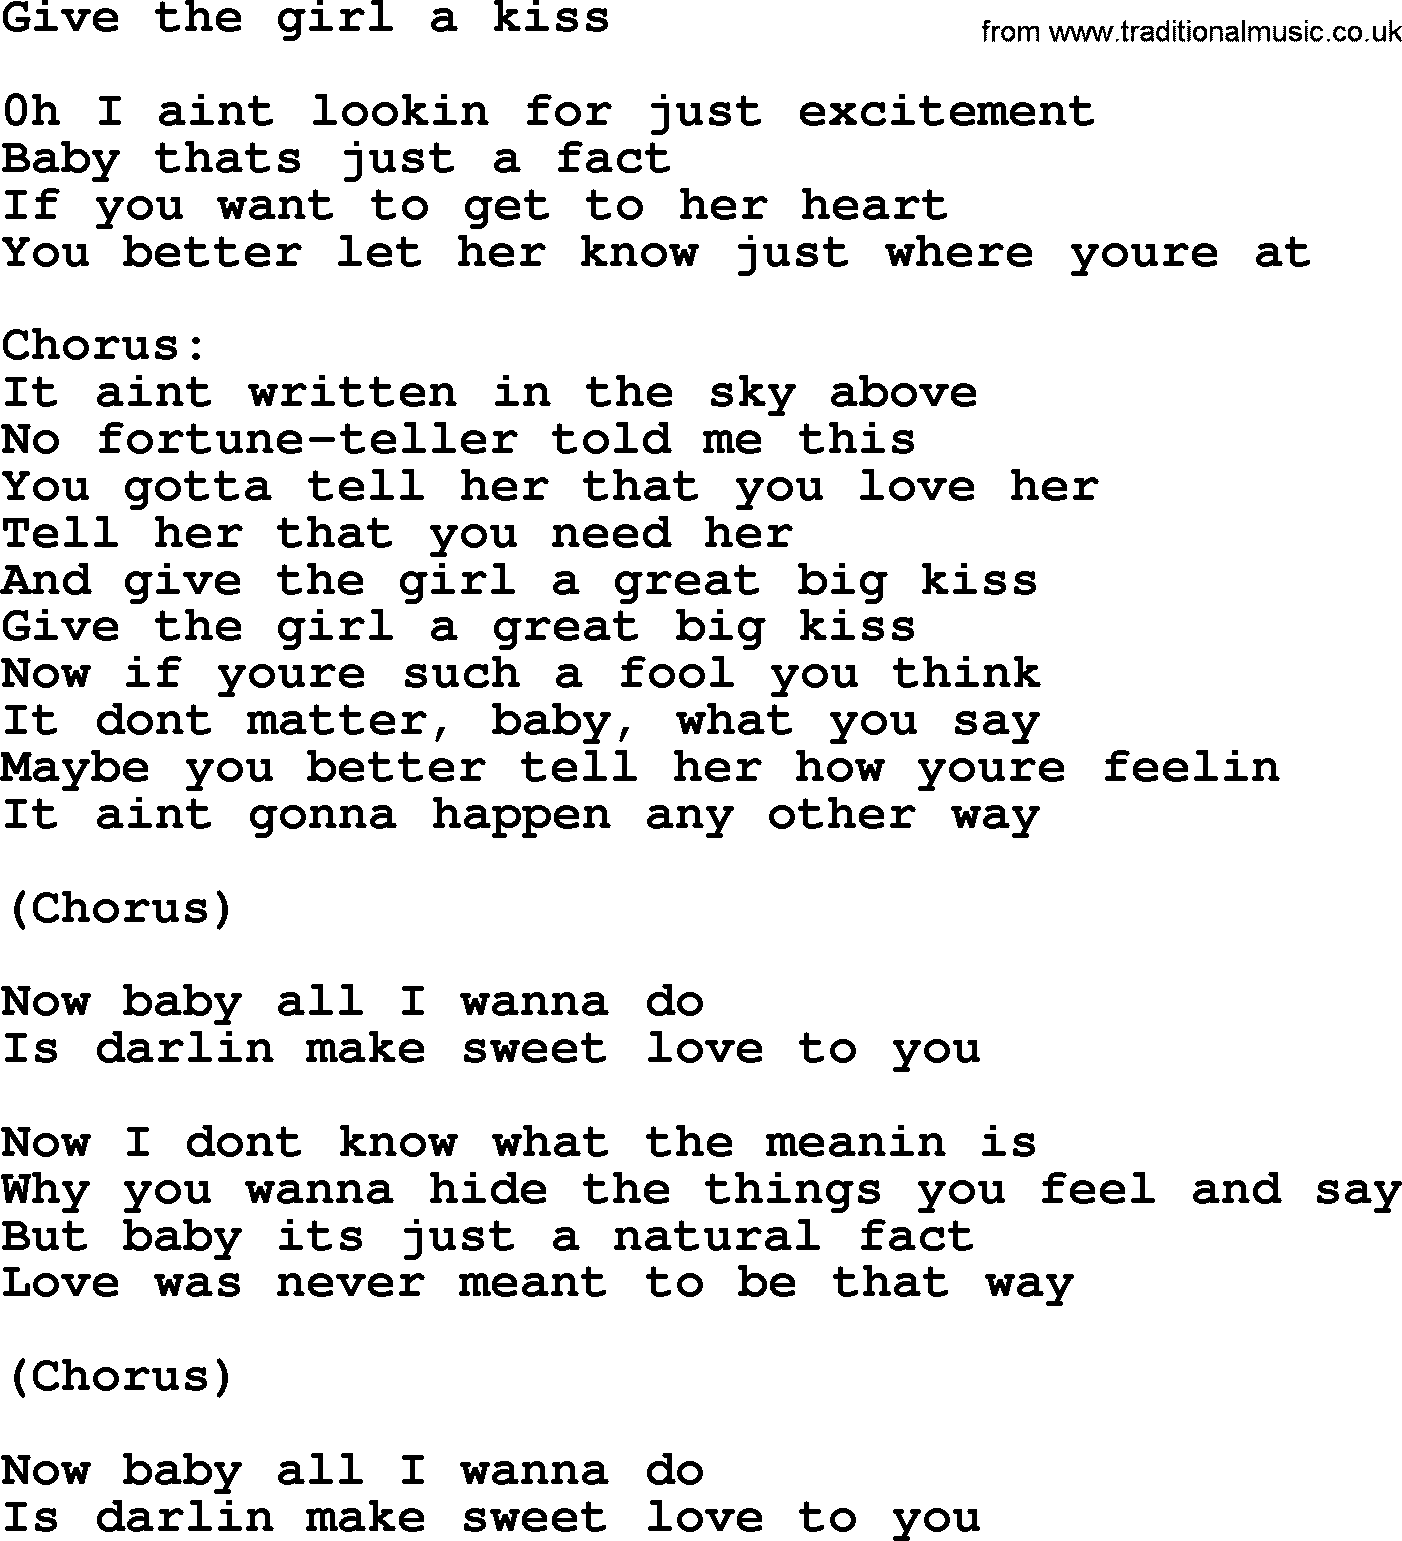 Bruce Springsteen song: Give The Girl A Kiss lyrics